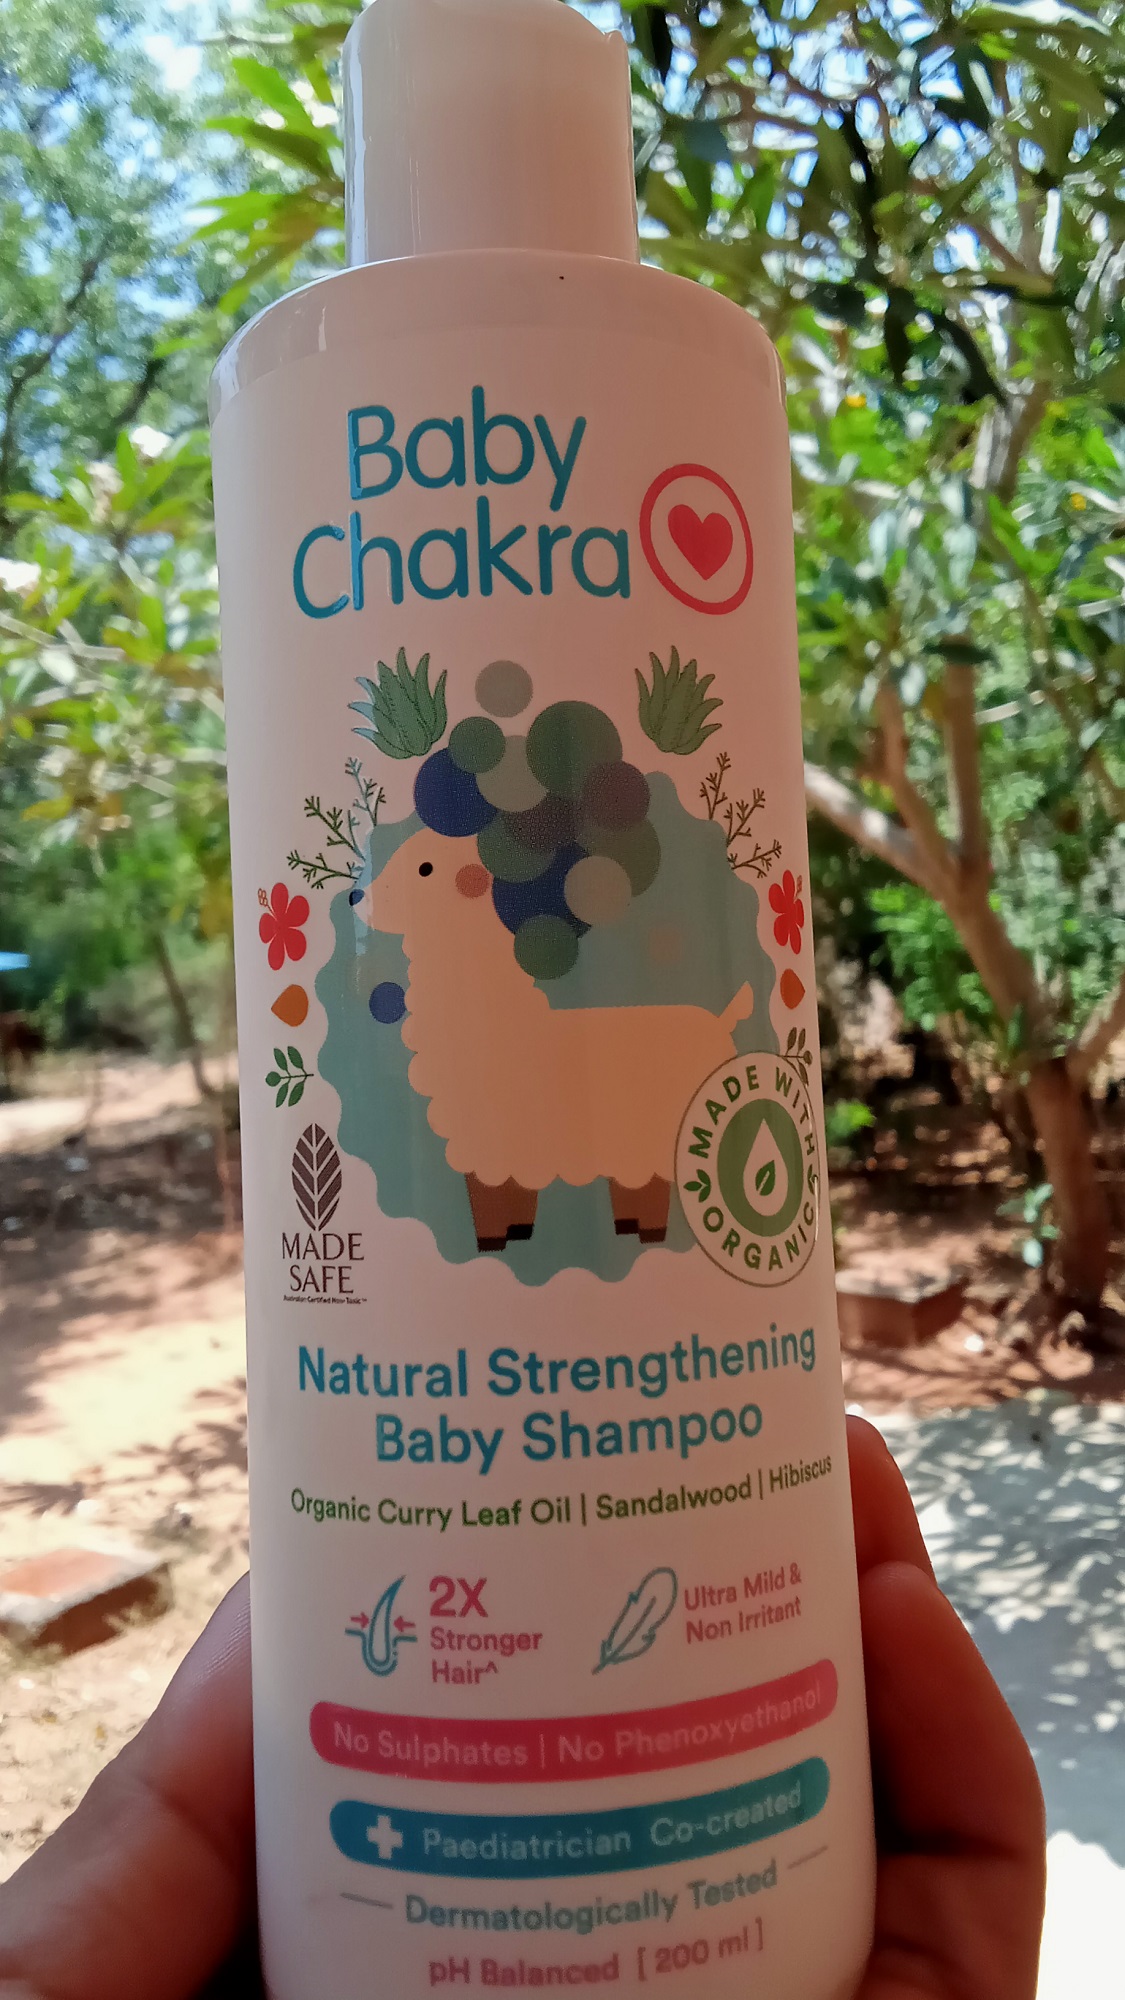 BabyChakra Natural Strengthening Baby Shampoo